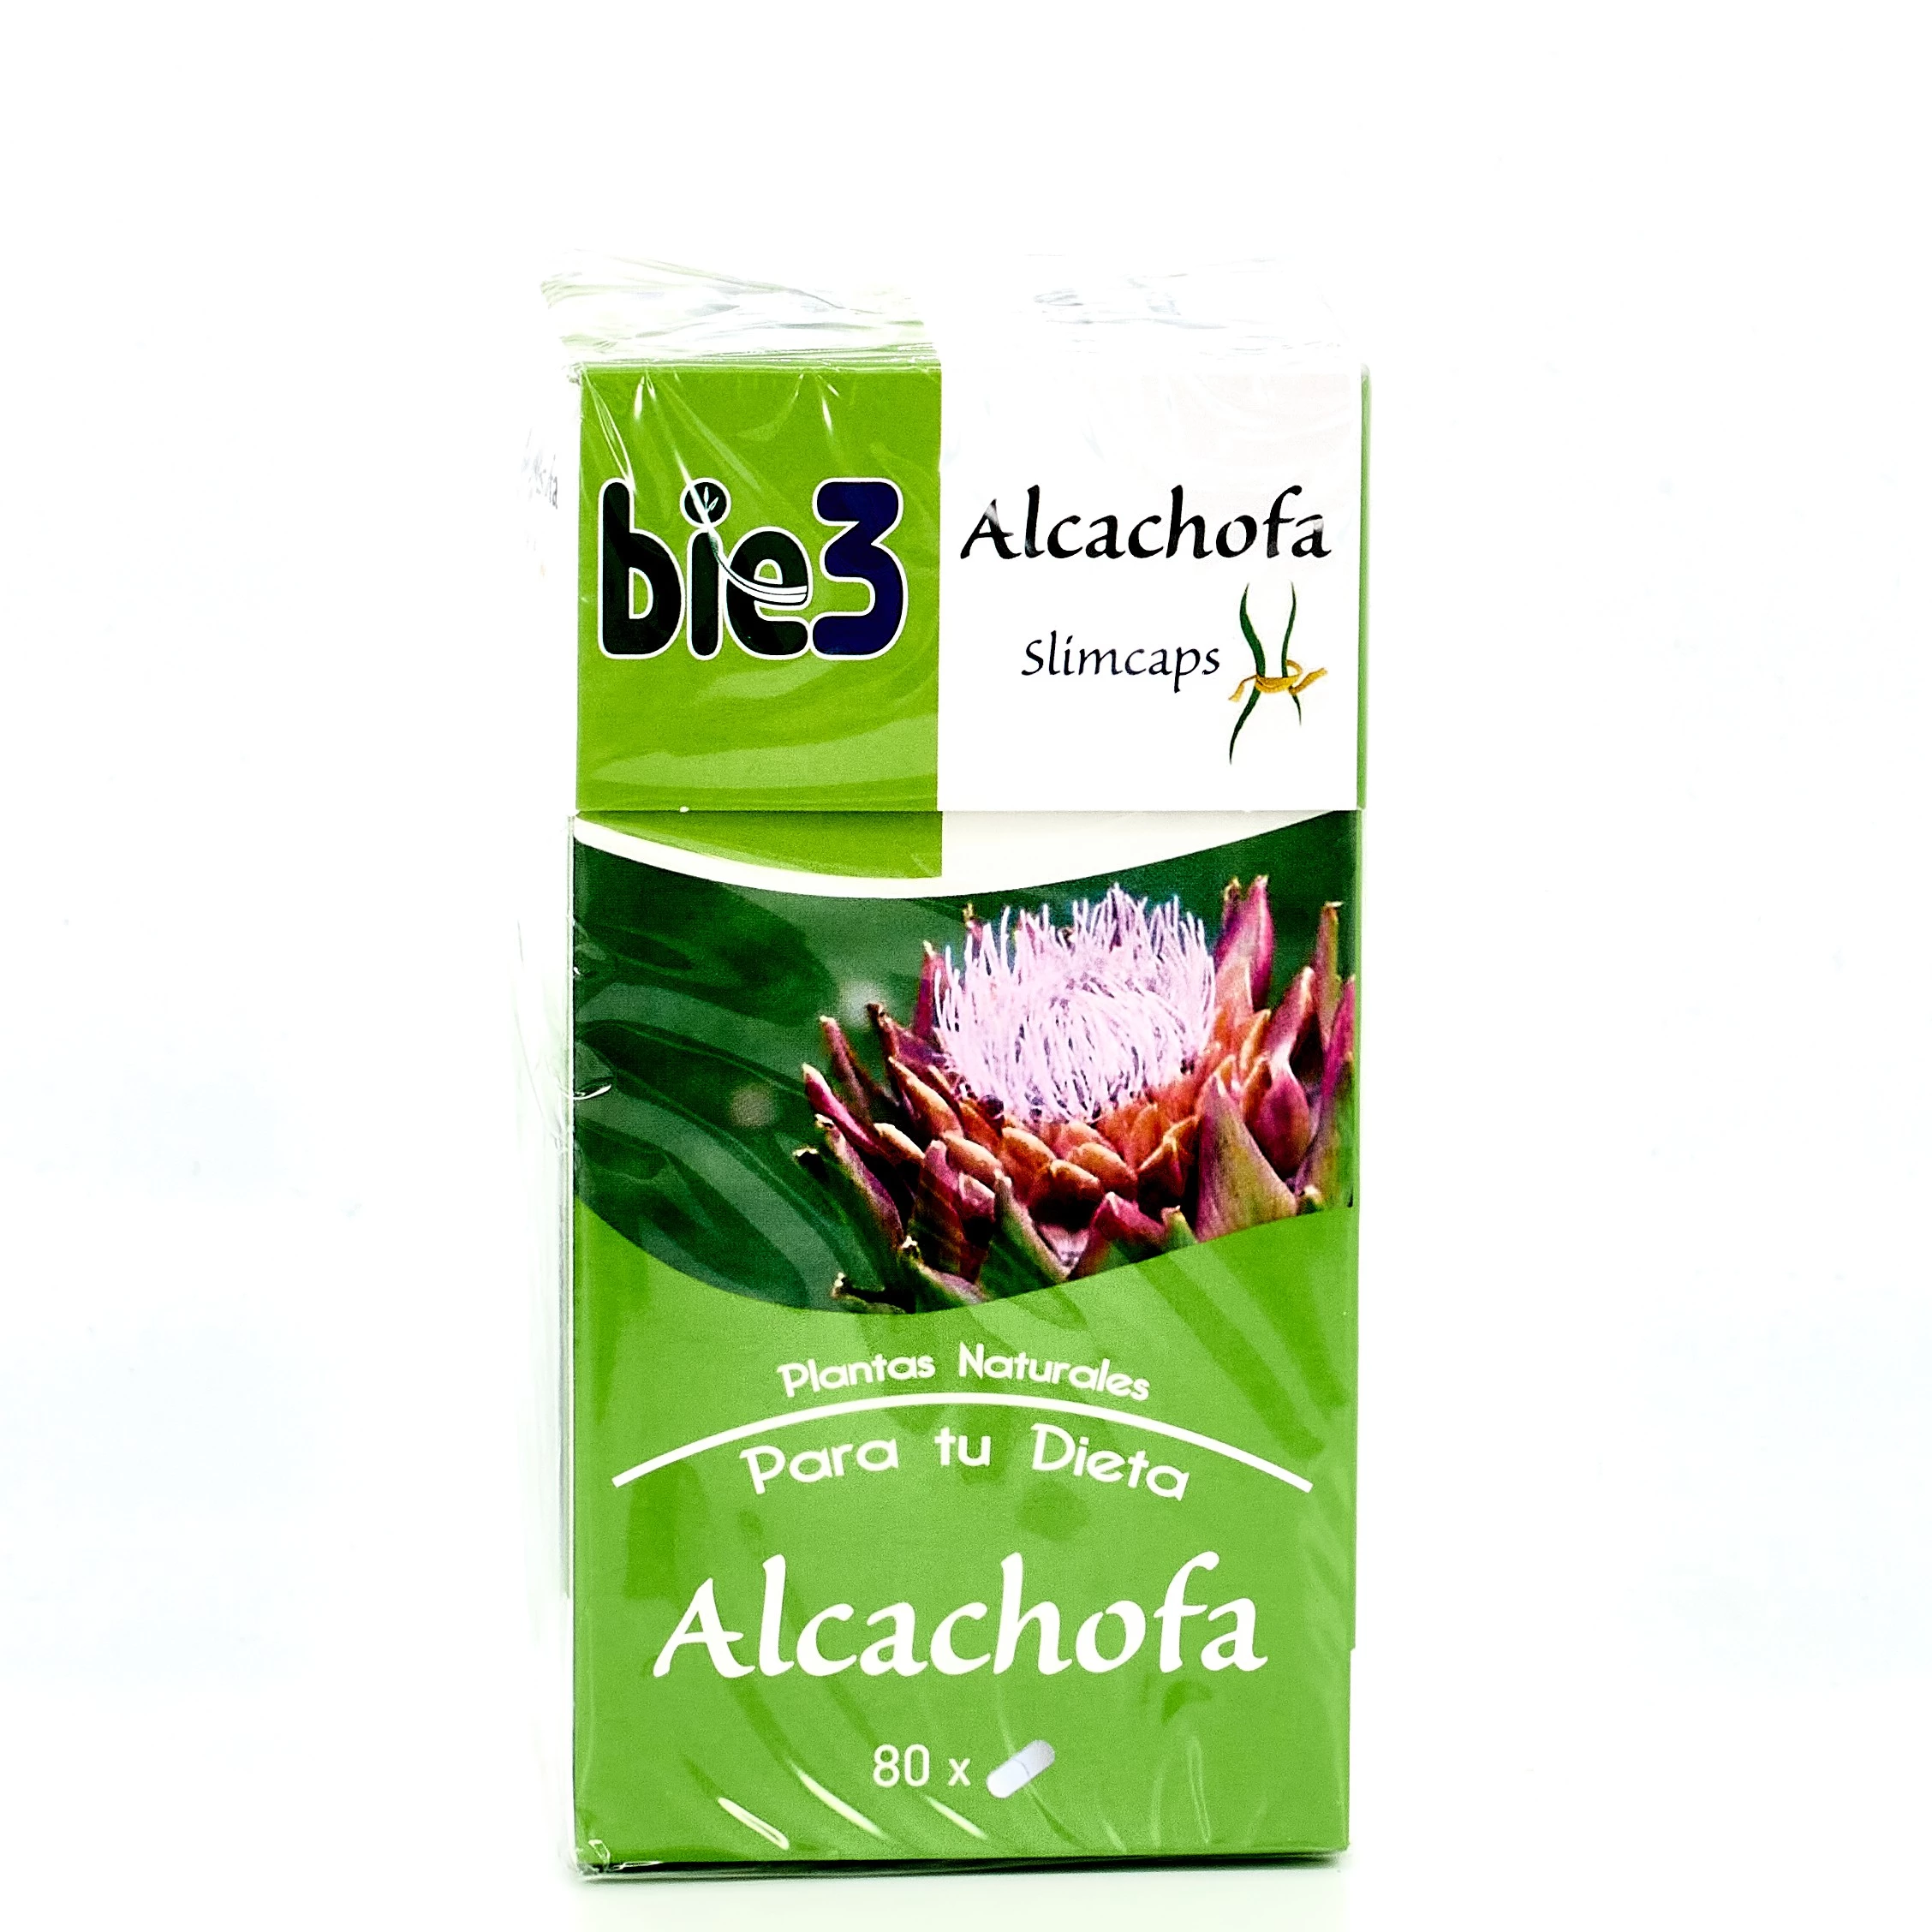 bie3 alcachofa slimcaps